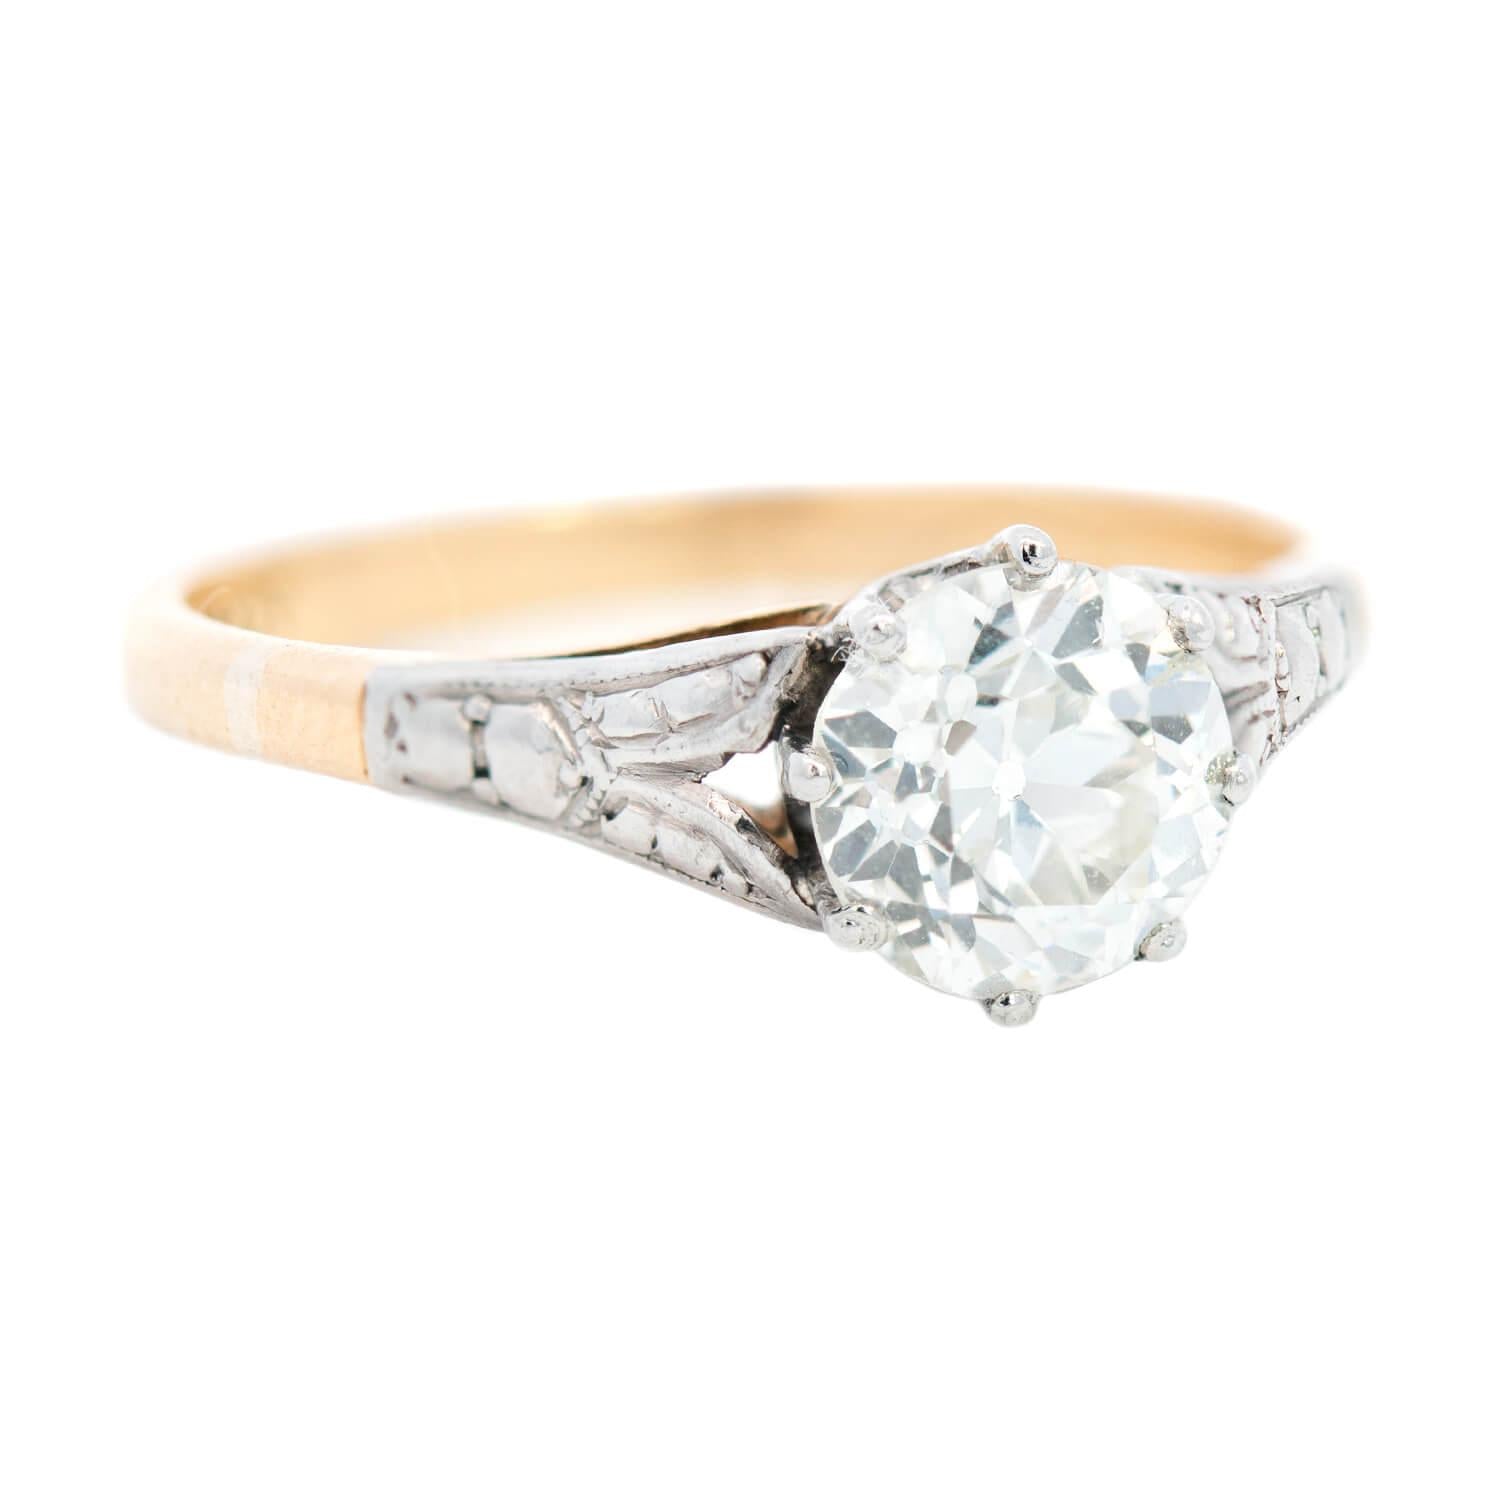 Early Edwardian 18k/Platinum Diamond Engagement Ring 1.04ct